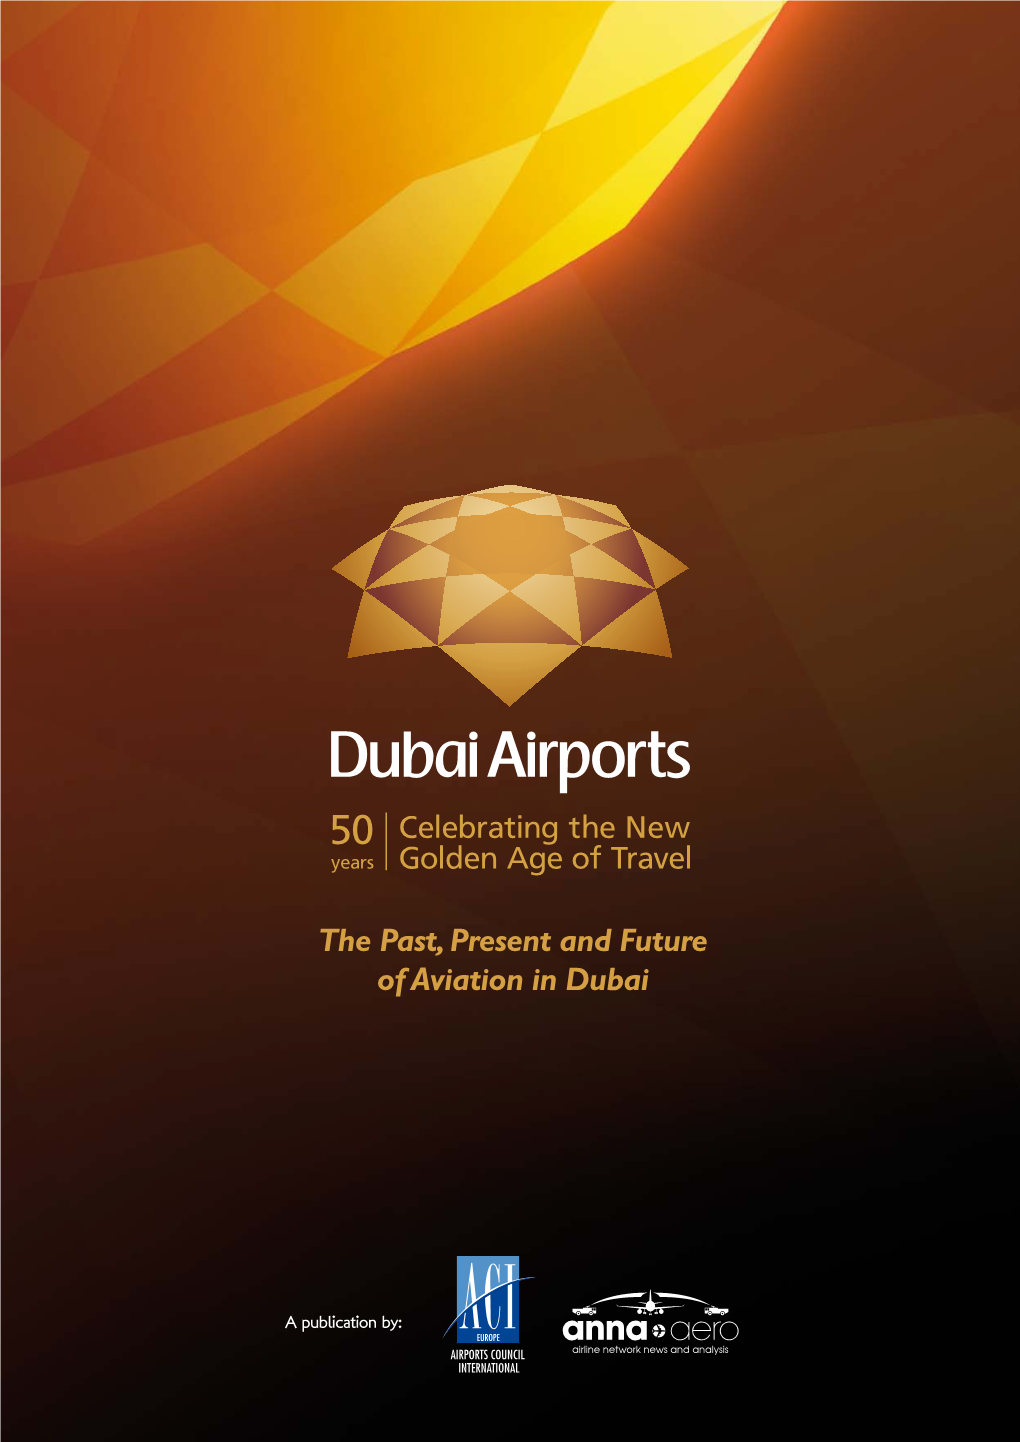 The Past, Present and Future of Aviation in Dubai